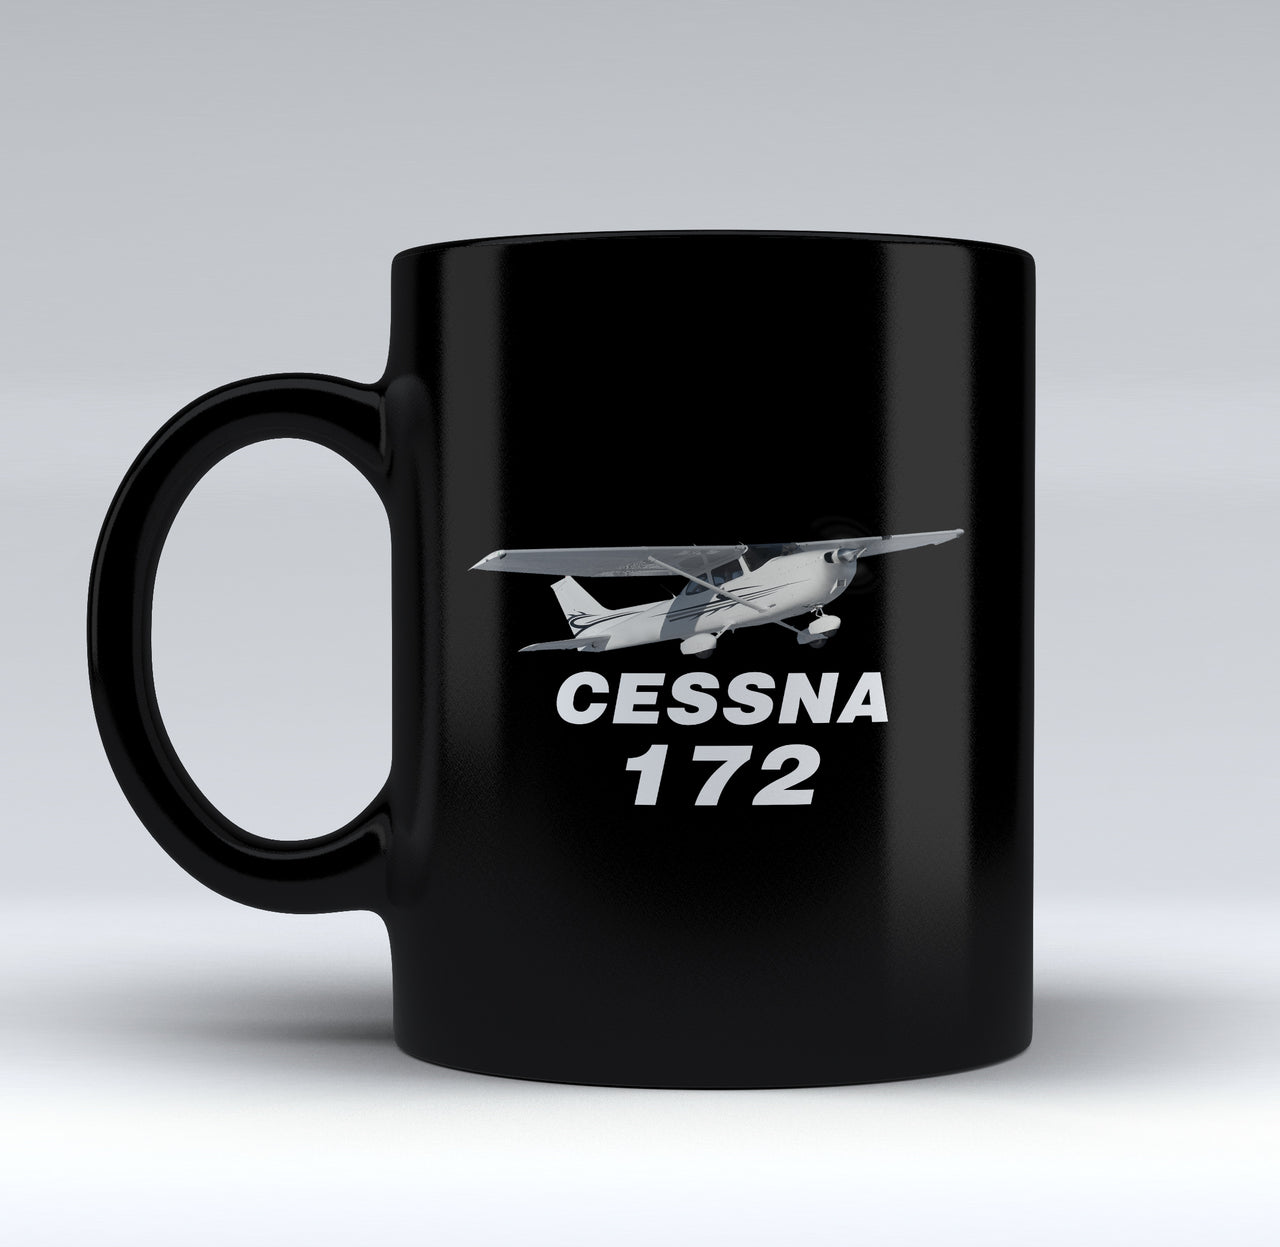 The Cessna 172 Designed Black Mugs